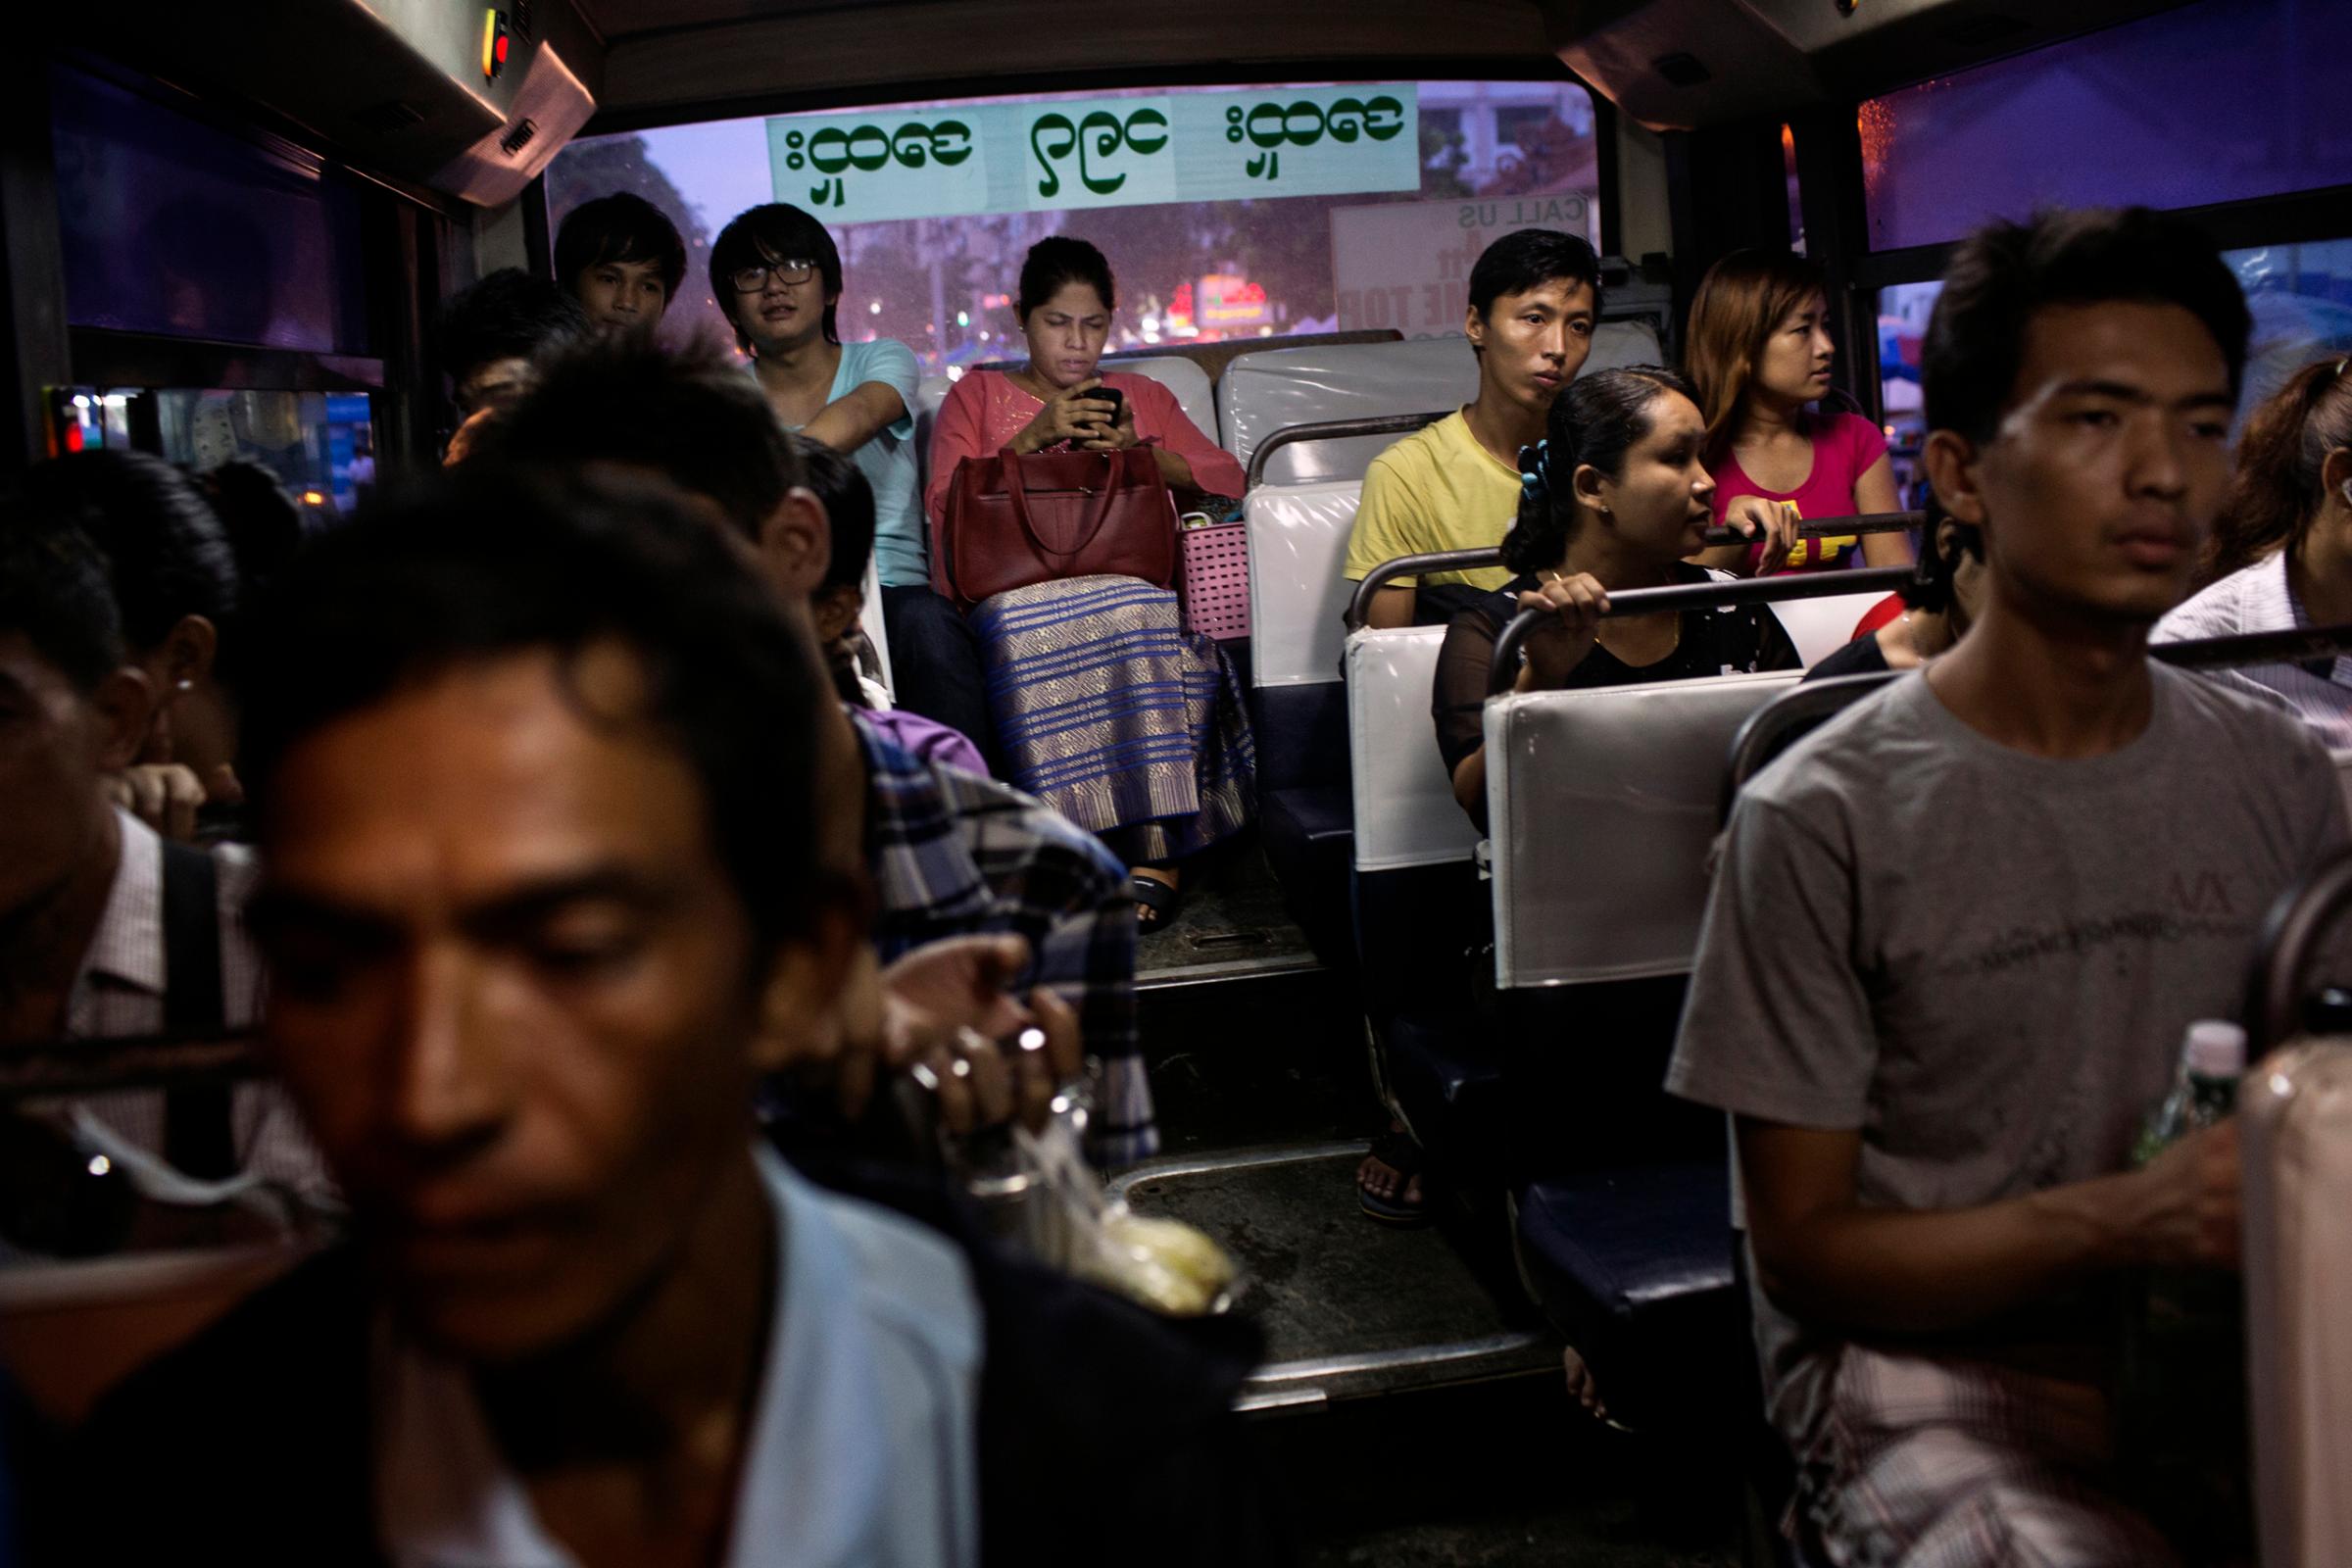 Passengers, some using smart phones, ride a bus in Yangon, Burma, June 21st, 2014.